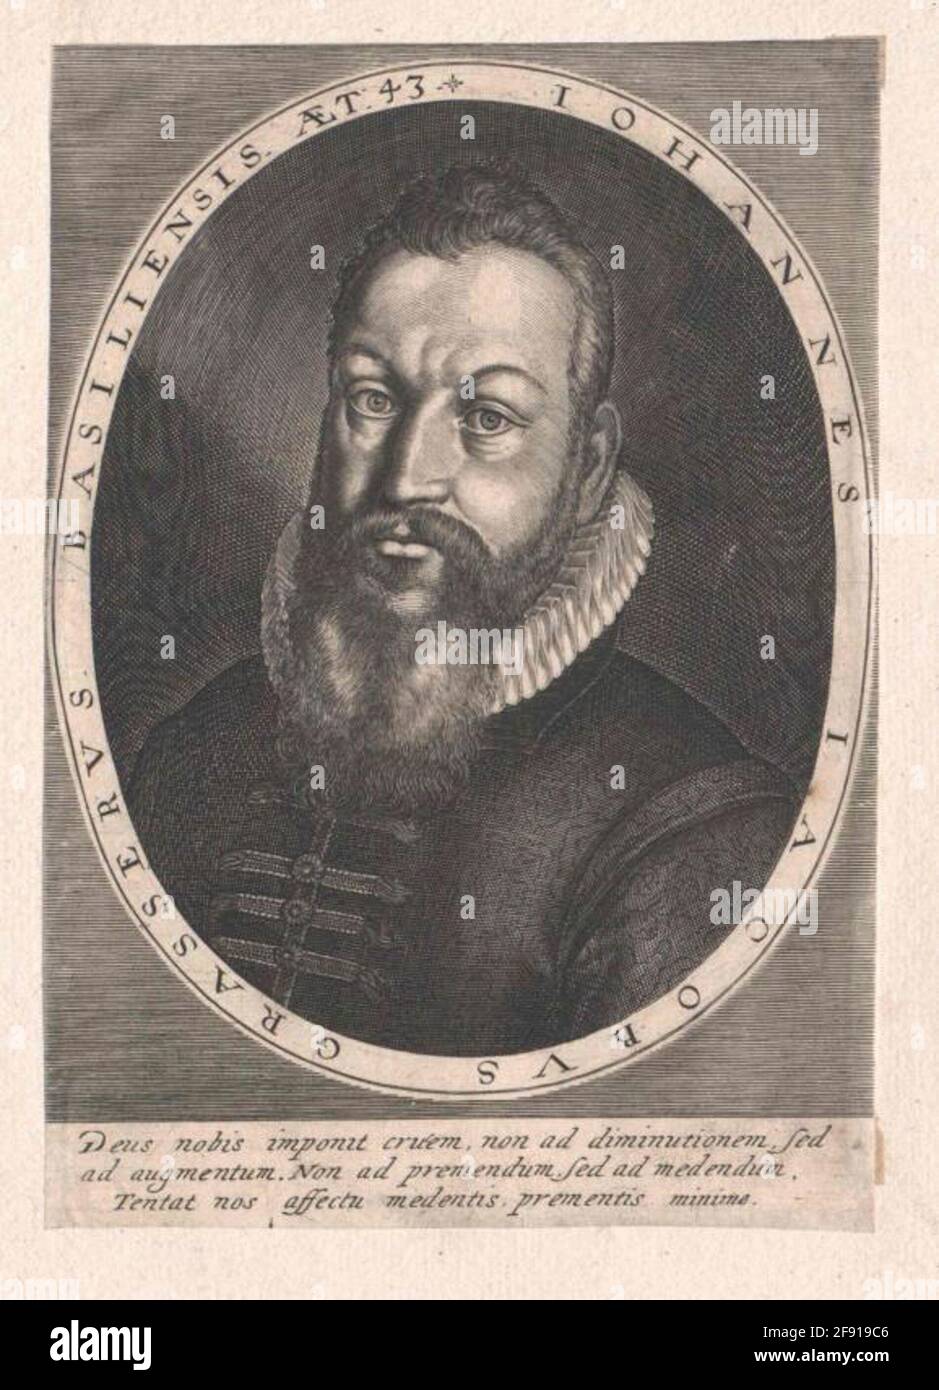 Grasser, Johann Jakob. Stock Photo